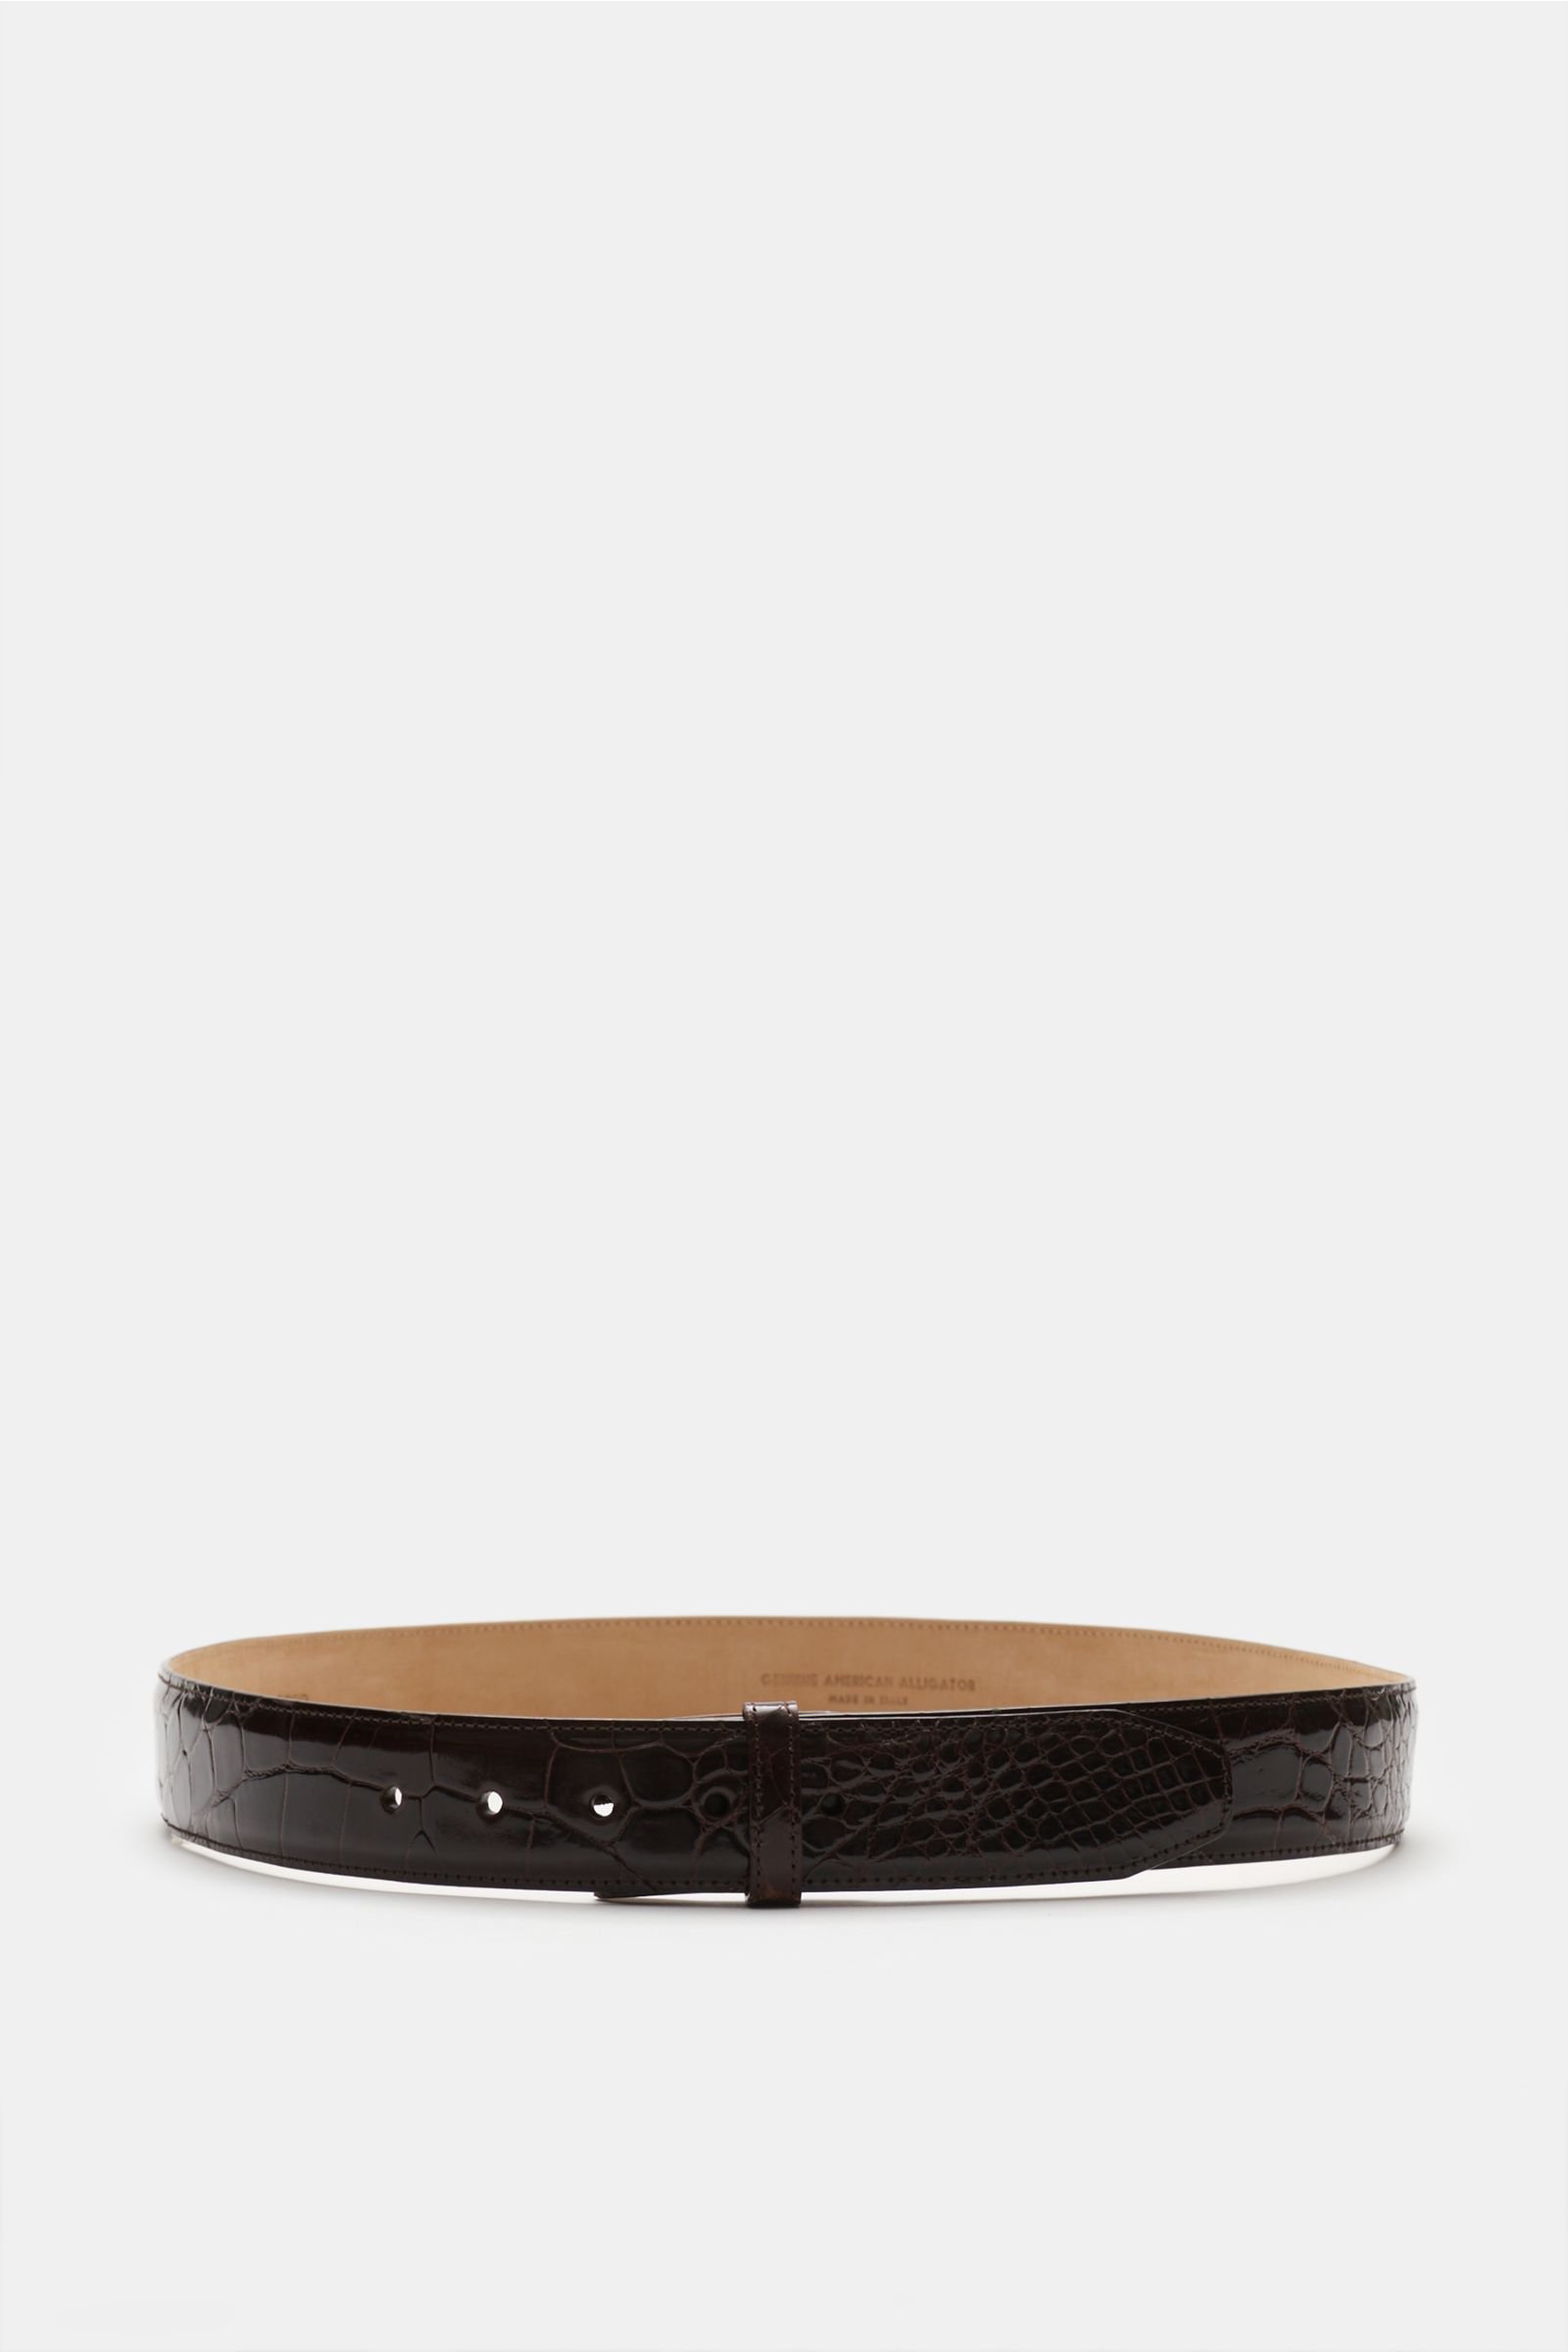 Alligator leather belt without buckle dark brown